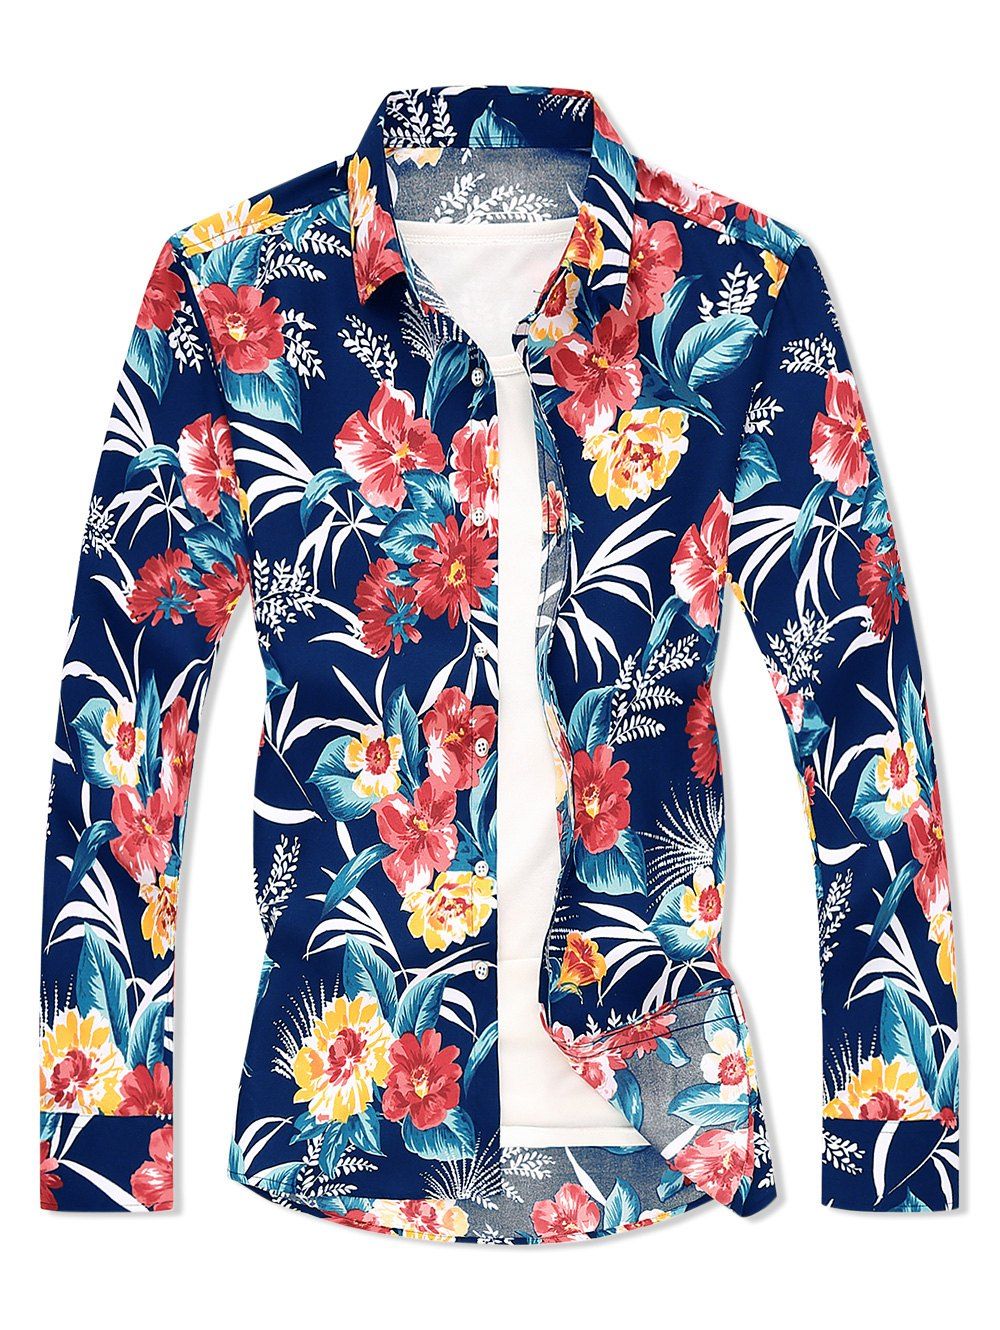 Flower Leaf Print Button Down Shirt - CADETBLUE XL